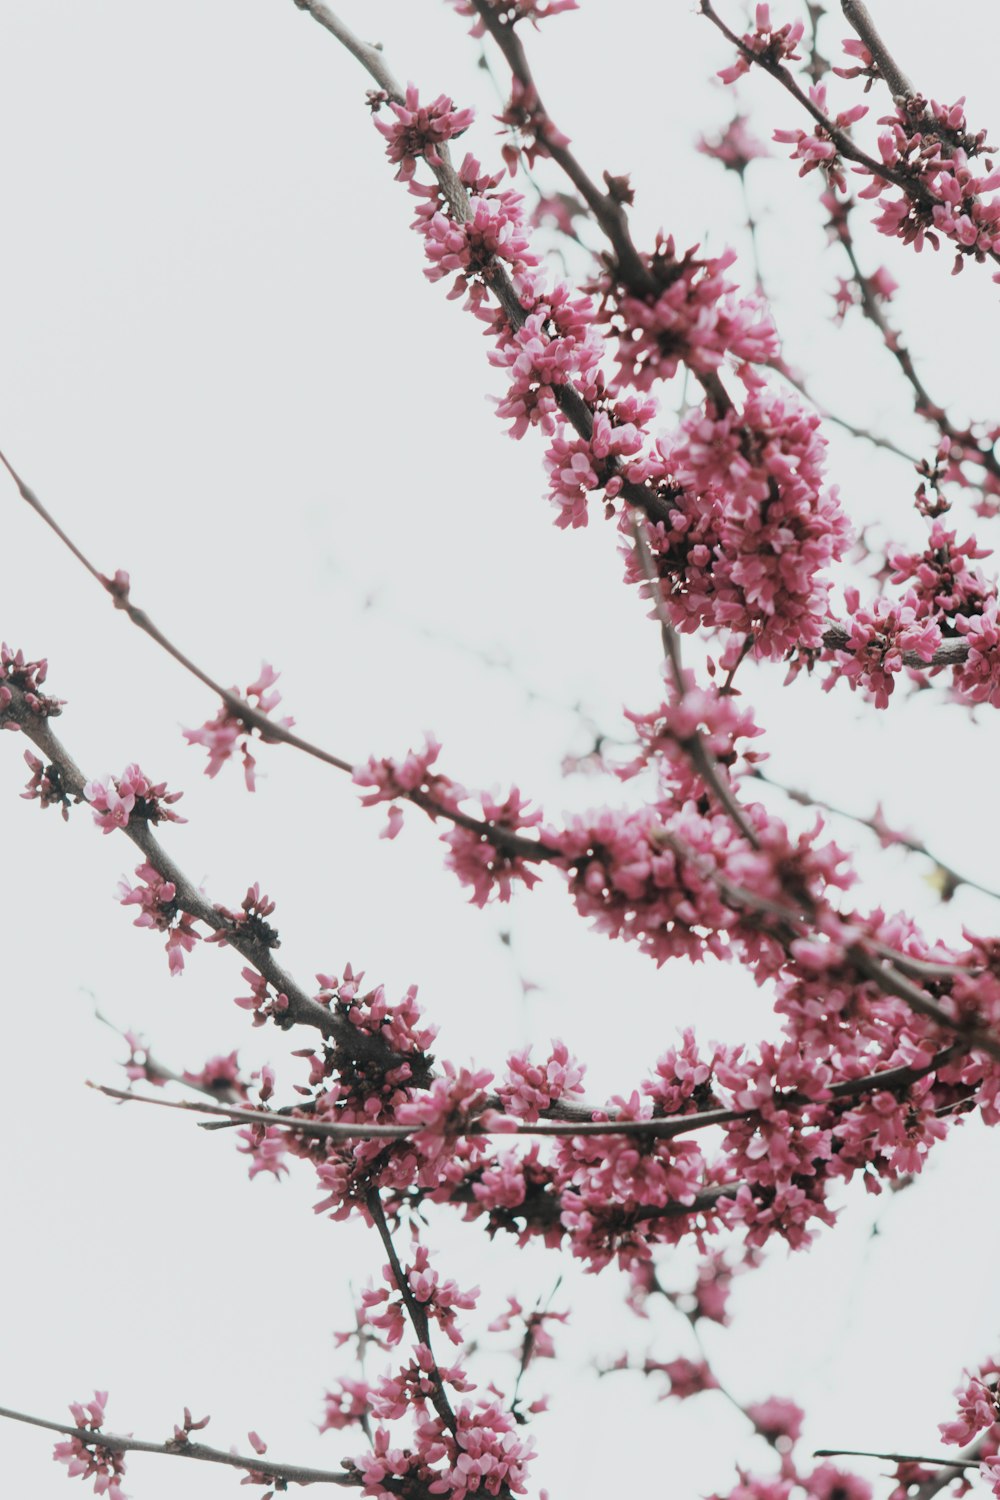 arbre de fleurs de cerisier rose